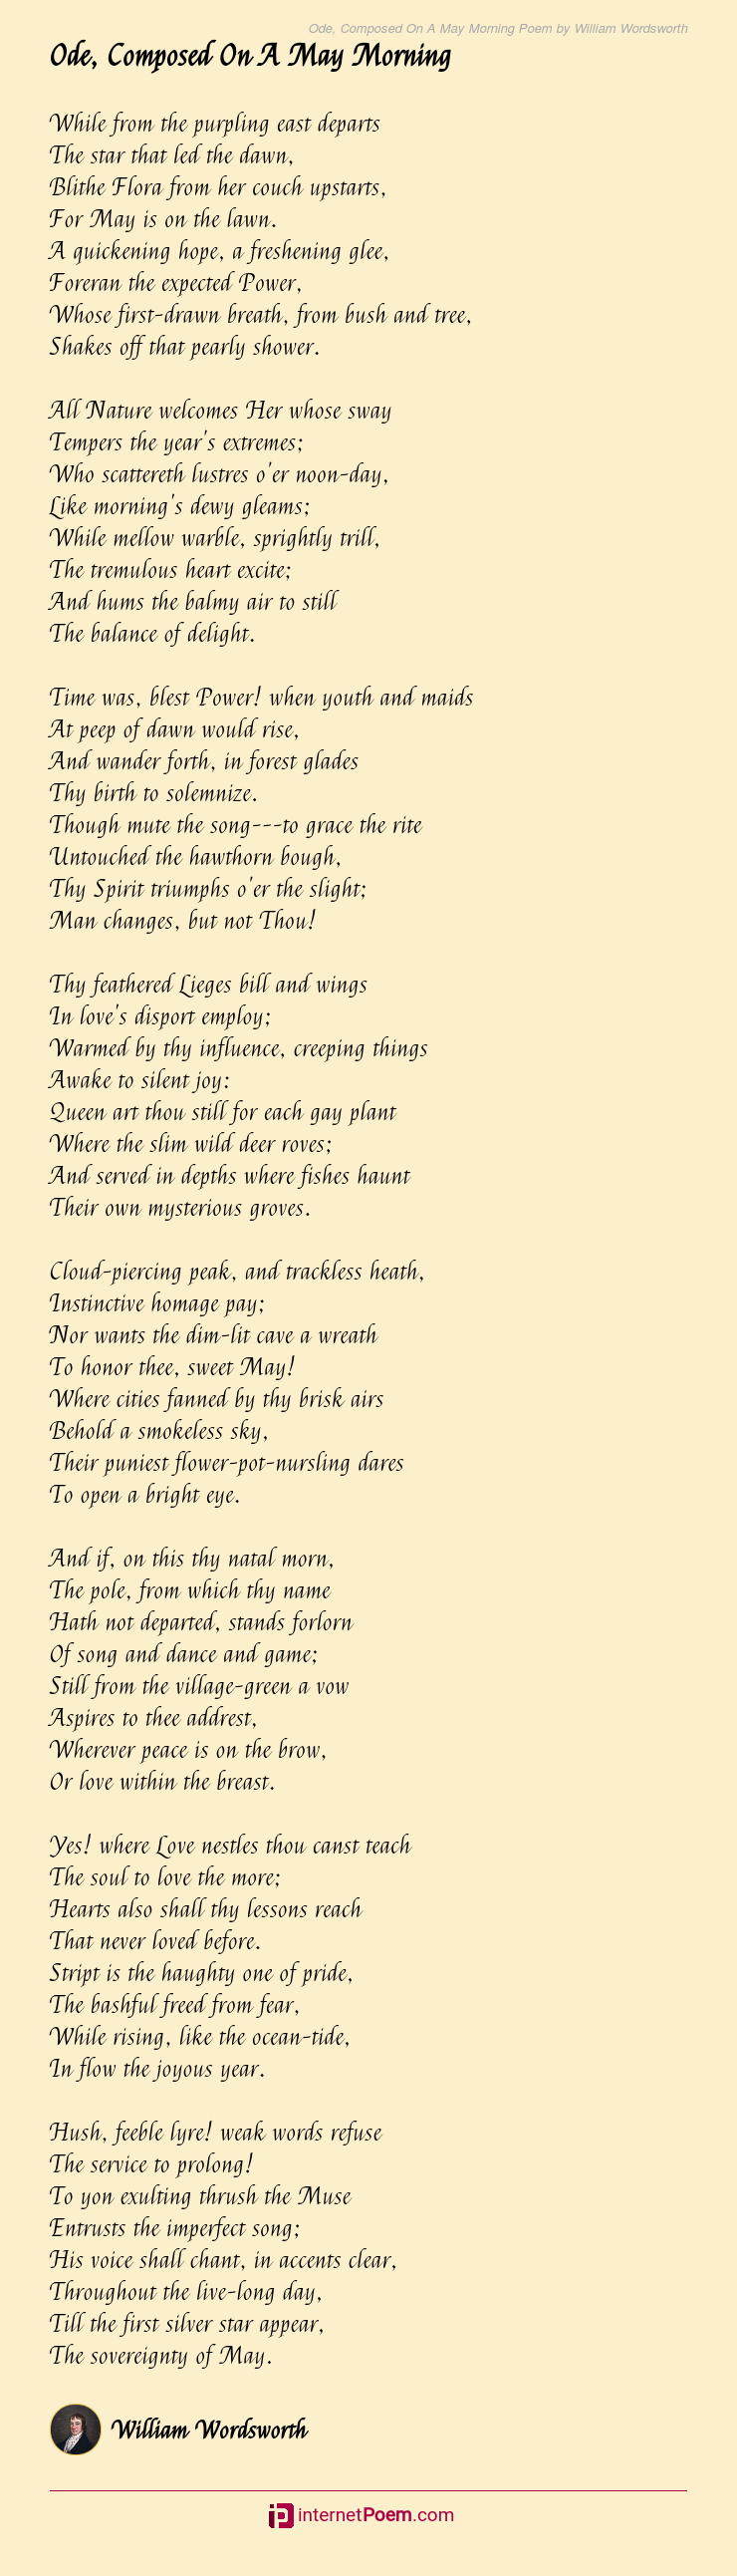 william wordsworth short poems